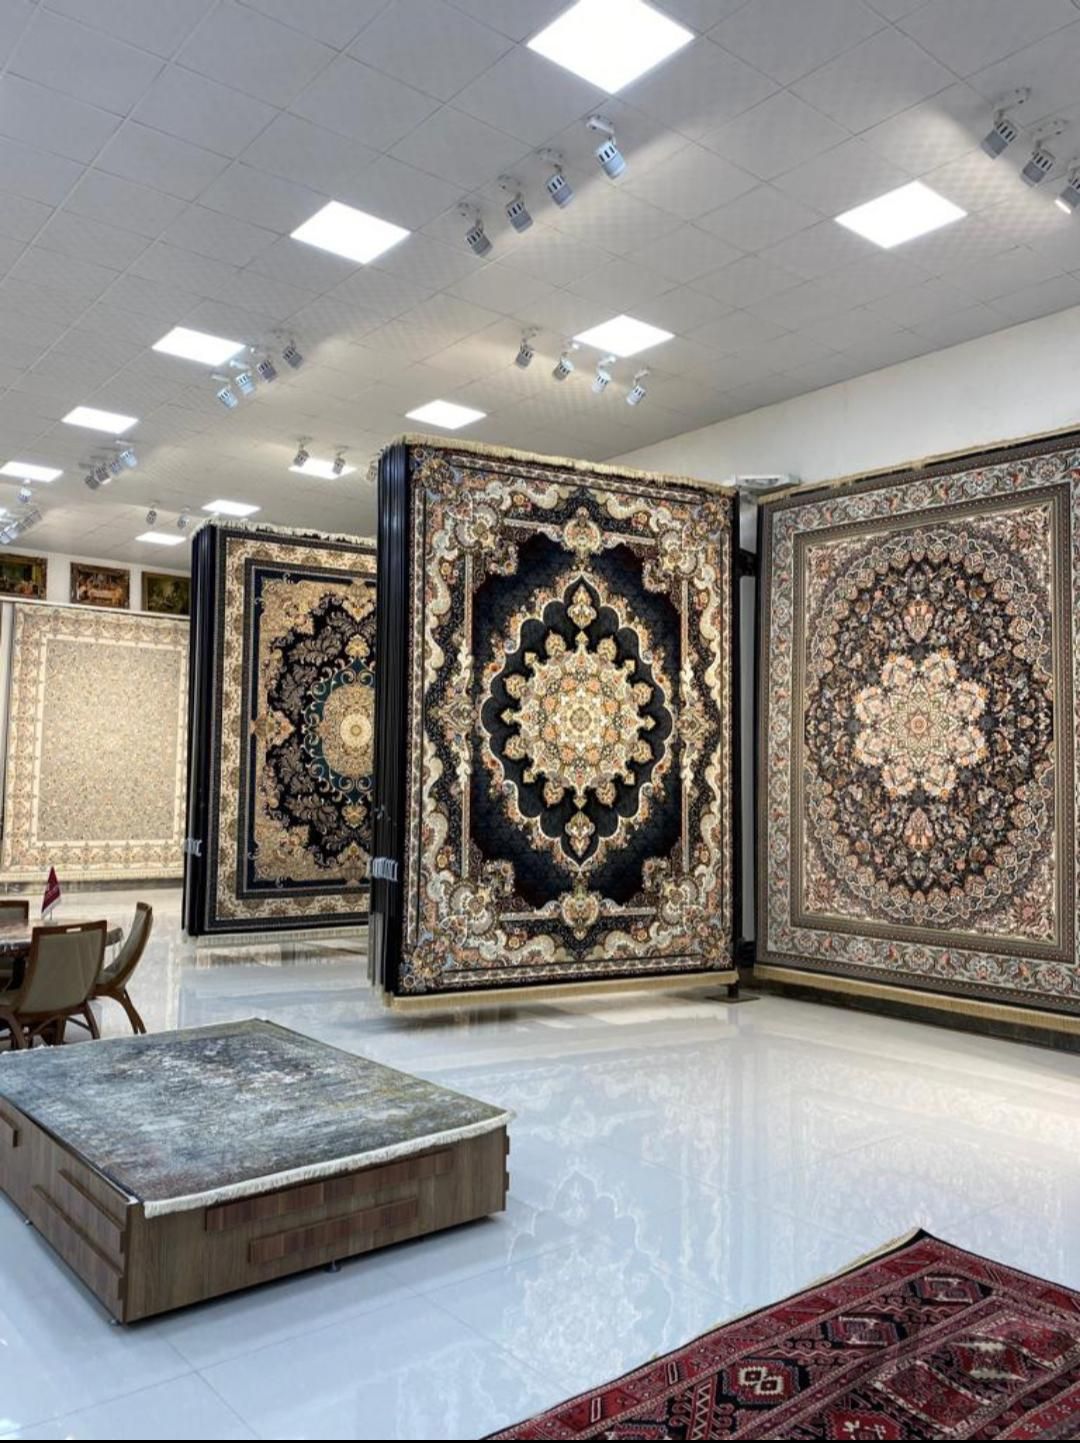 فرش کاشان مدل طناز انواع رنگبندی های زیبا1200شانه|میز تلویزیون|شیراز, شهرک سراج|دیوار